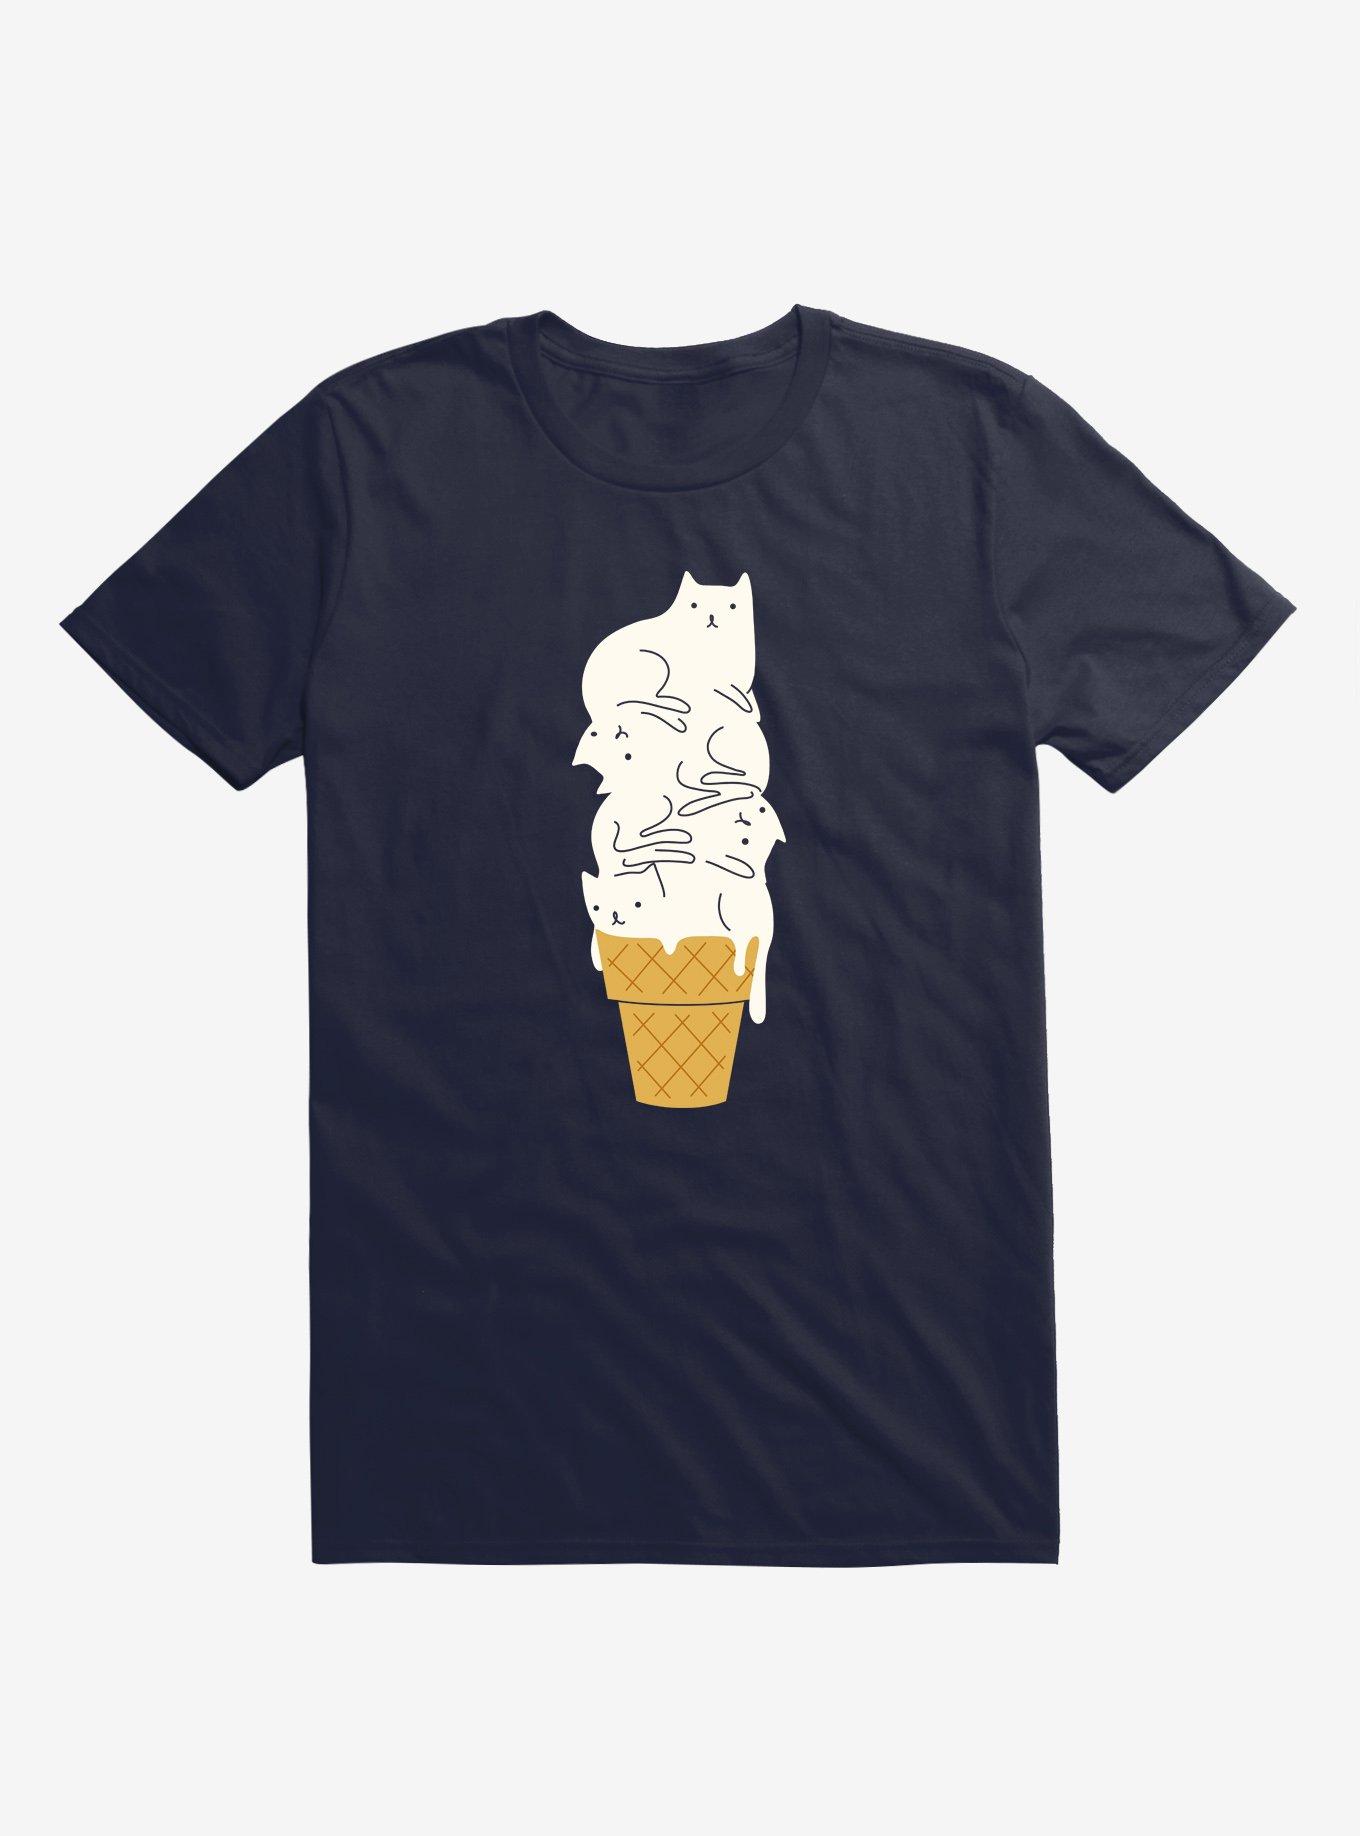 Meowlting Ice Cream Cats Navy Blue T-Shirt, NAVY, hi-res